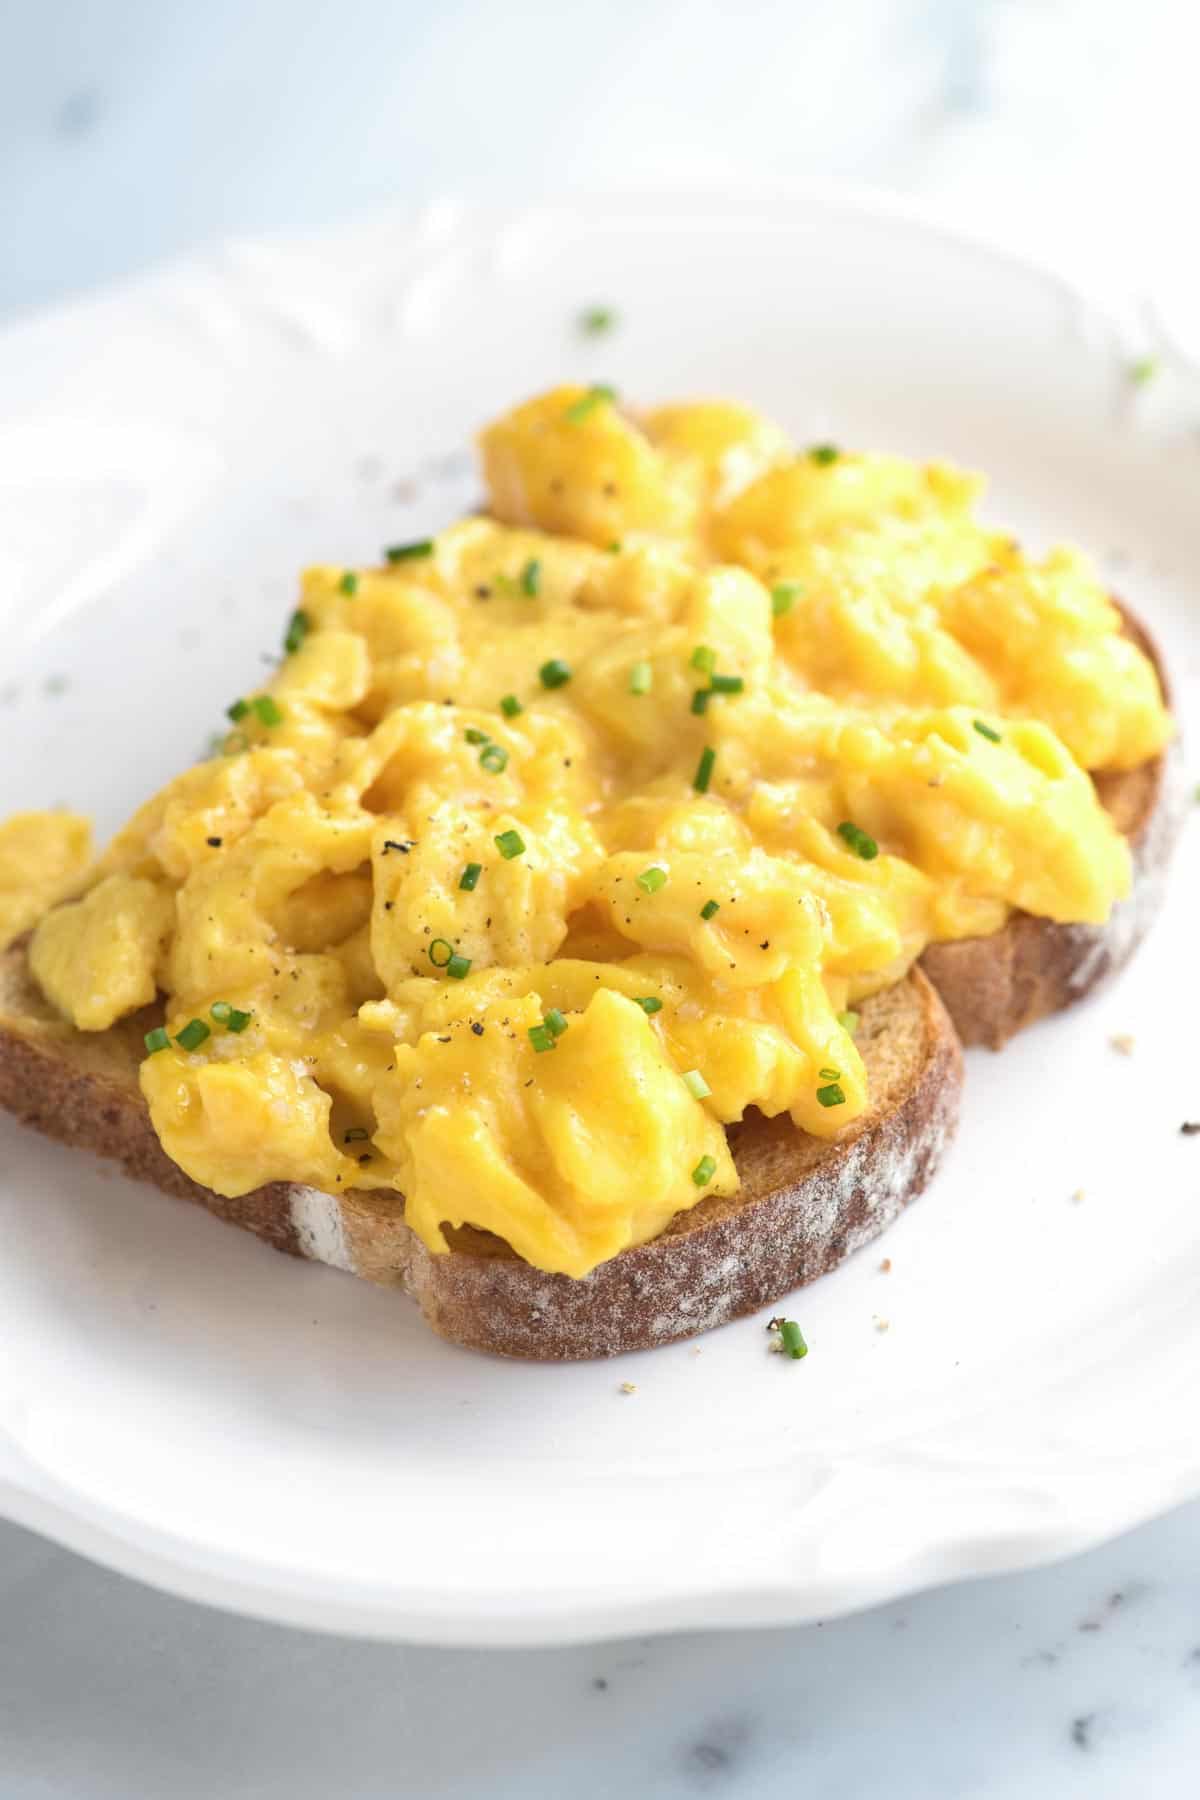 Soft and creamy scrambled eggs